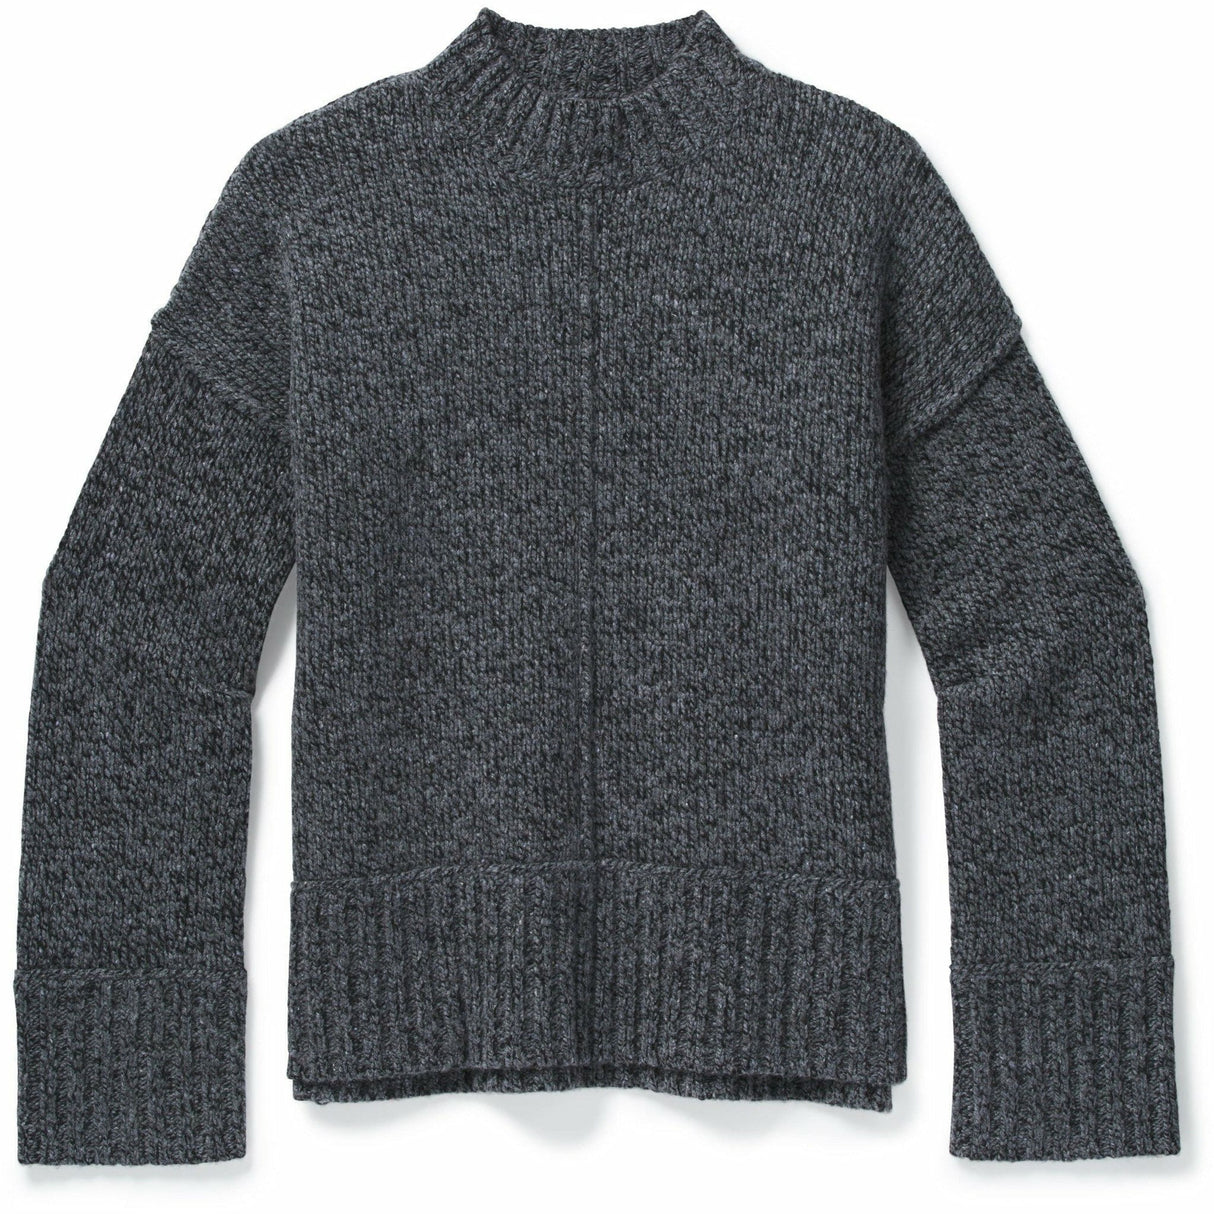 Smartwool Womens Bell Meadow Sweater  -  Small / Black/Medium Gray Heather Marl